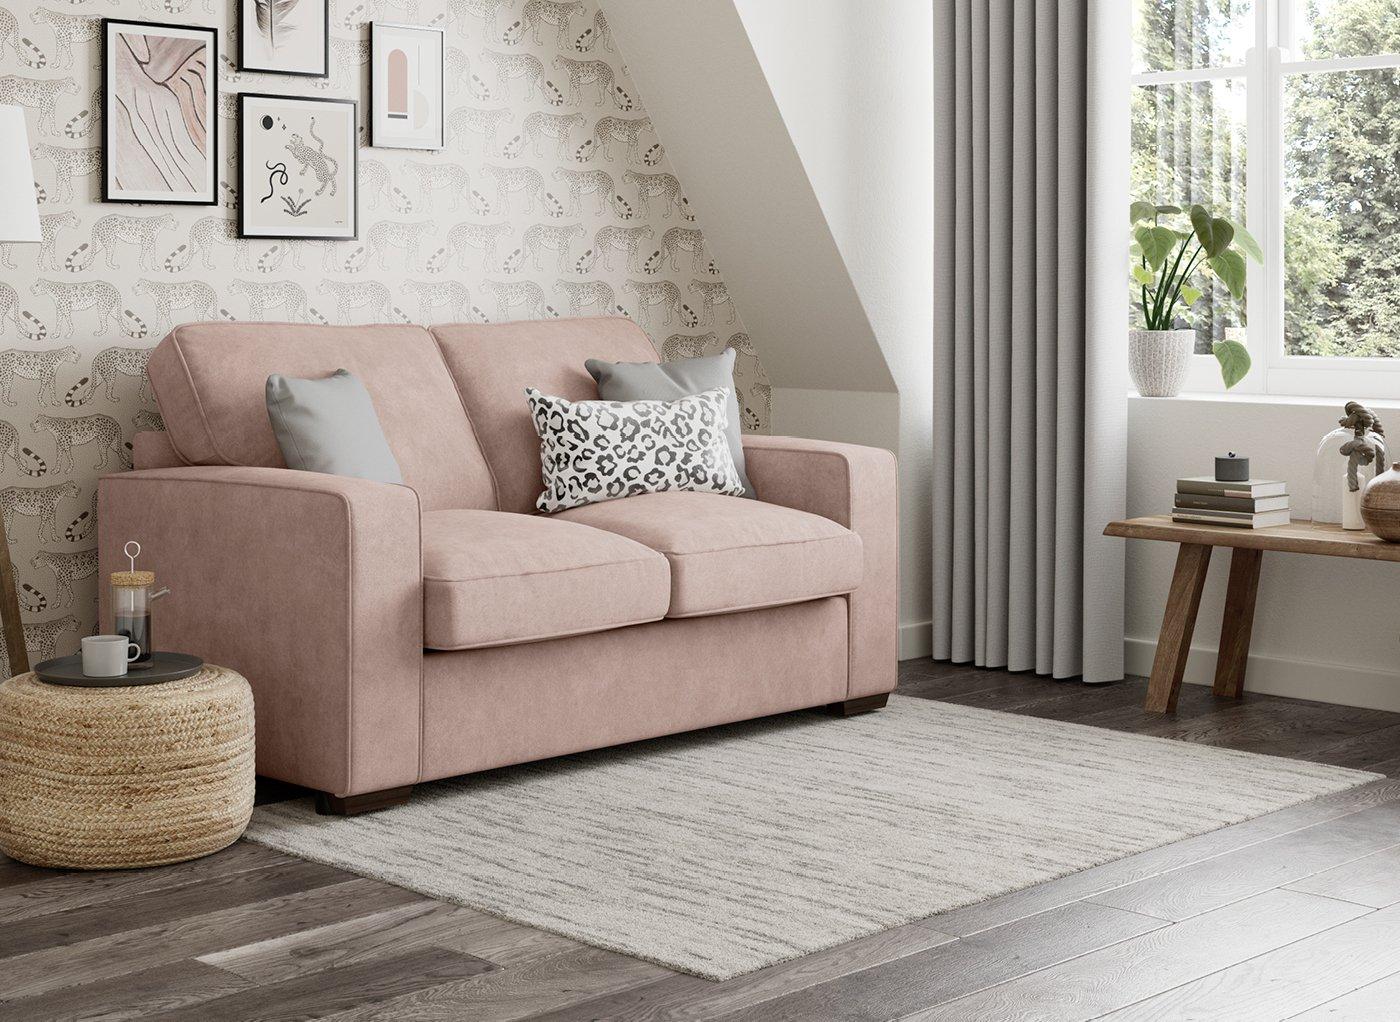 pink sofa bed ebay